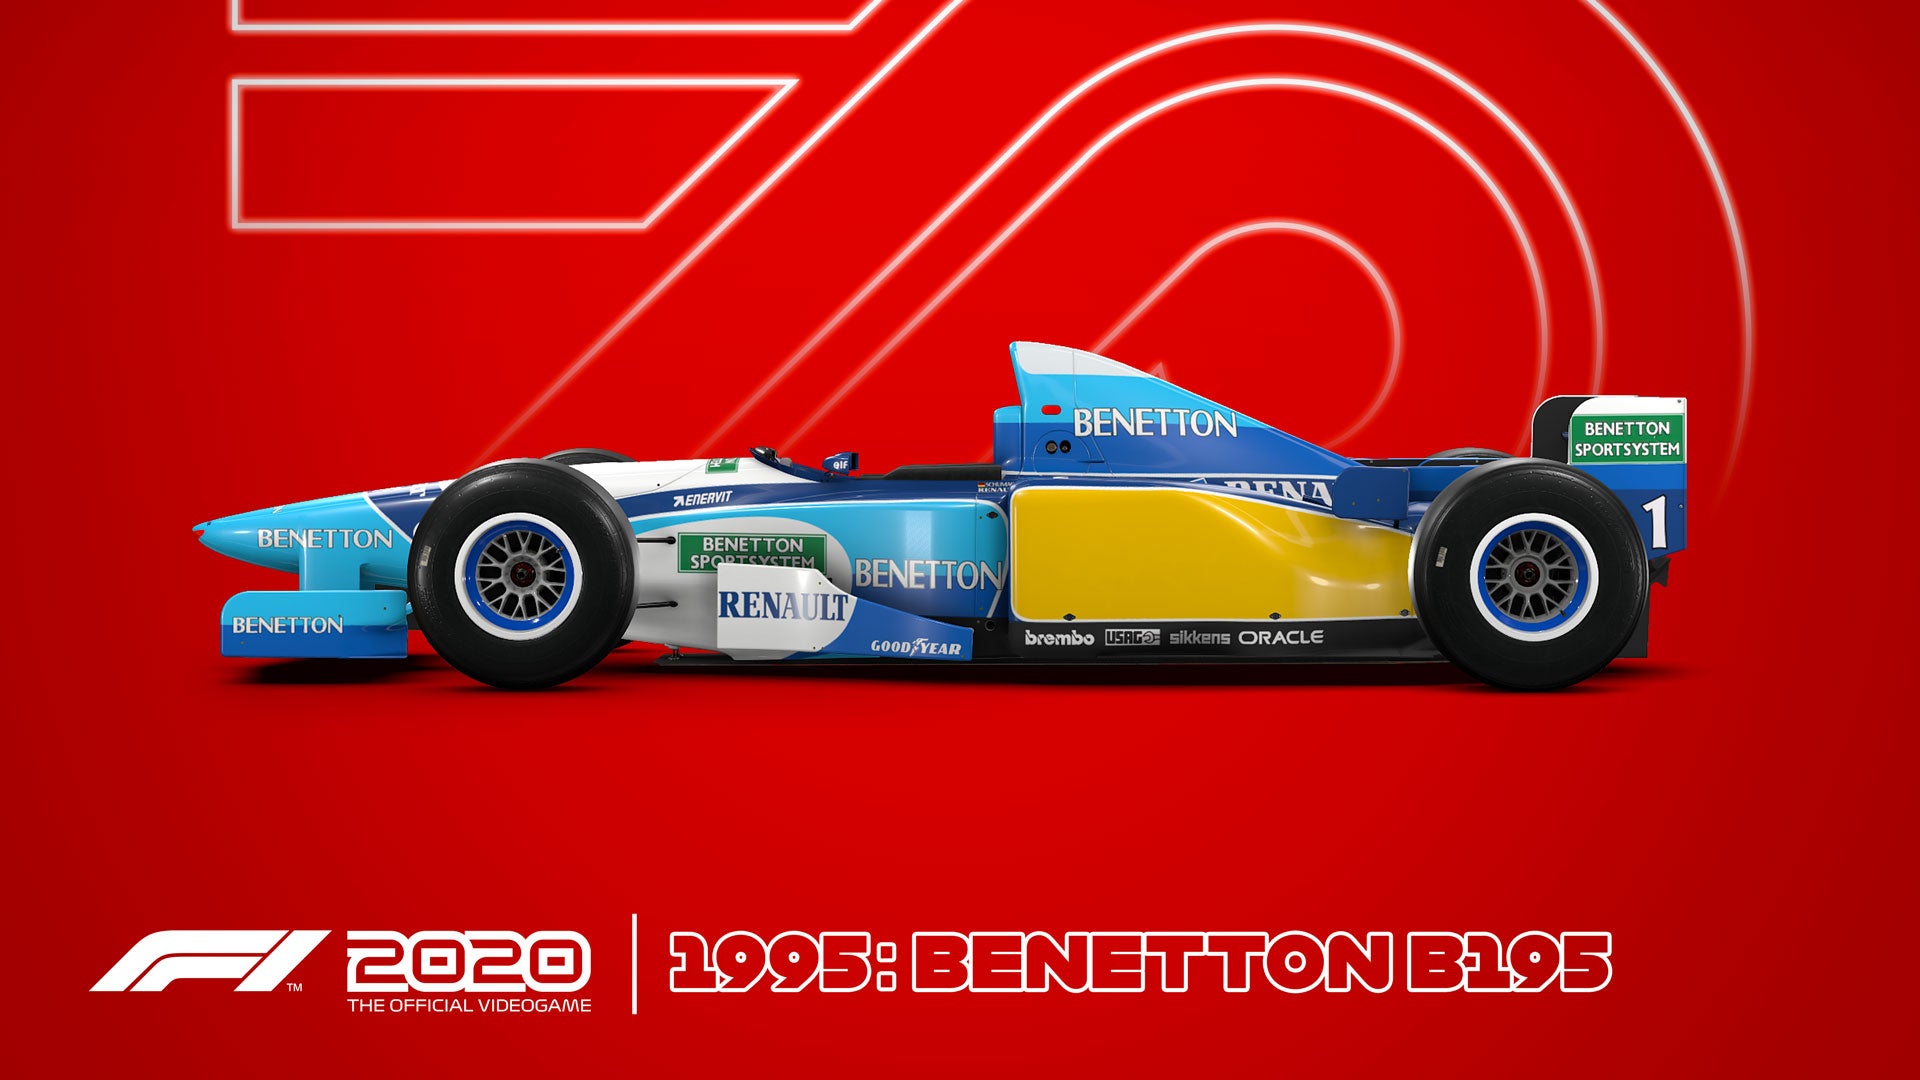 F12020_Benetton_95_16x9.jpg